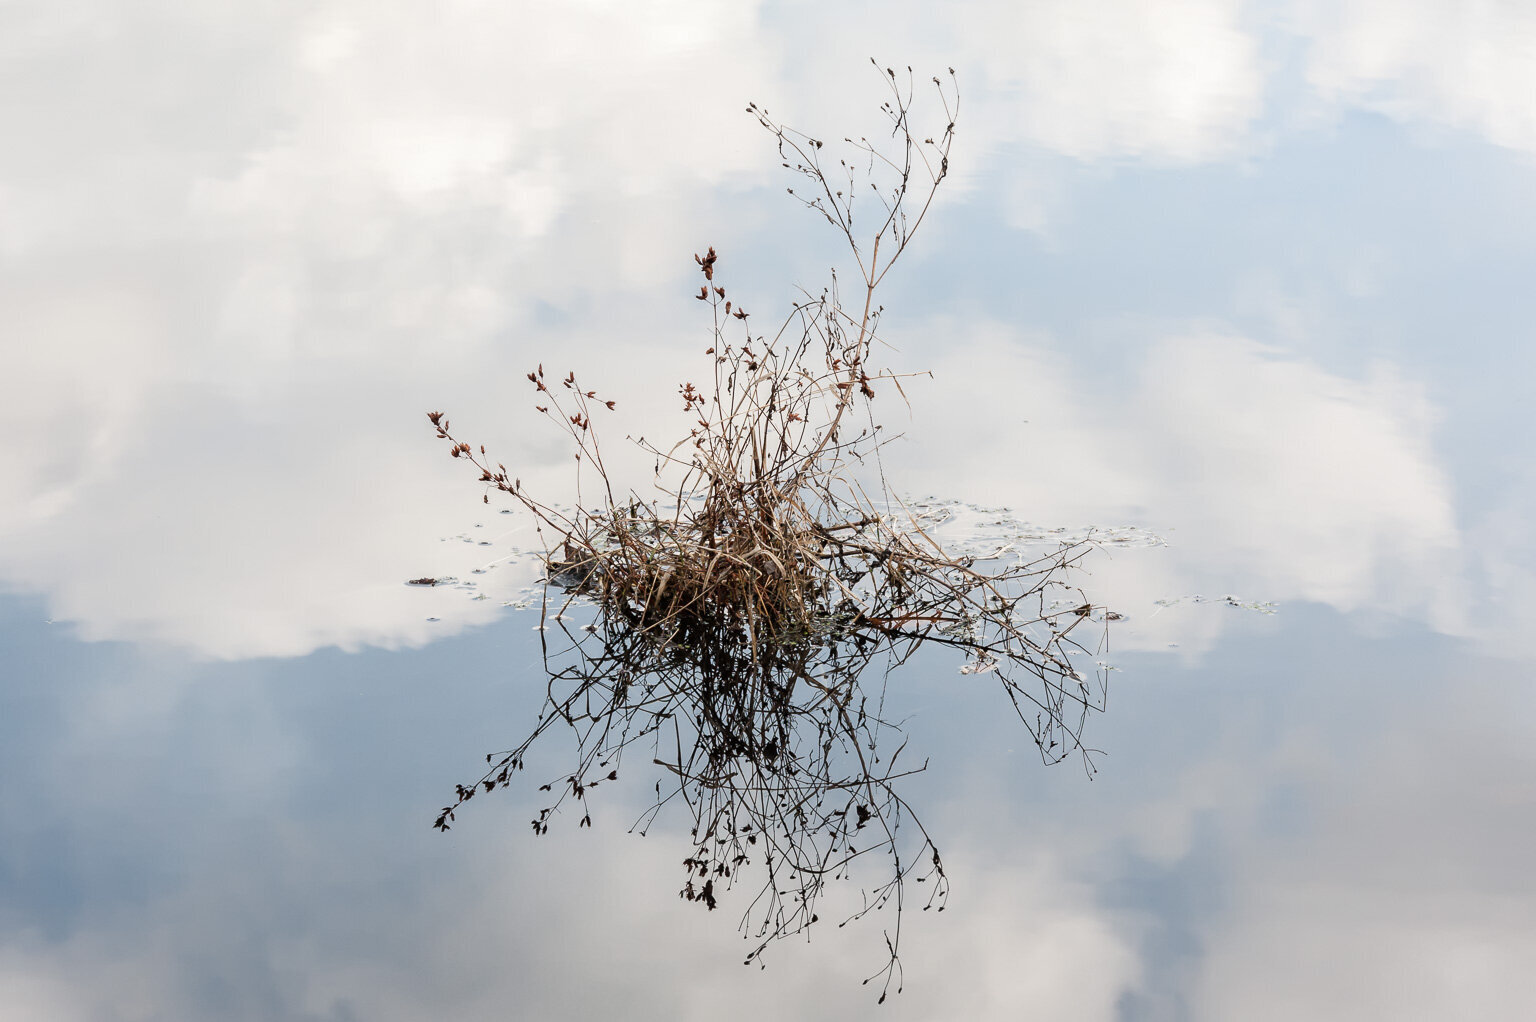 "Afloat in Reflection" by Linda DeStefano Brown